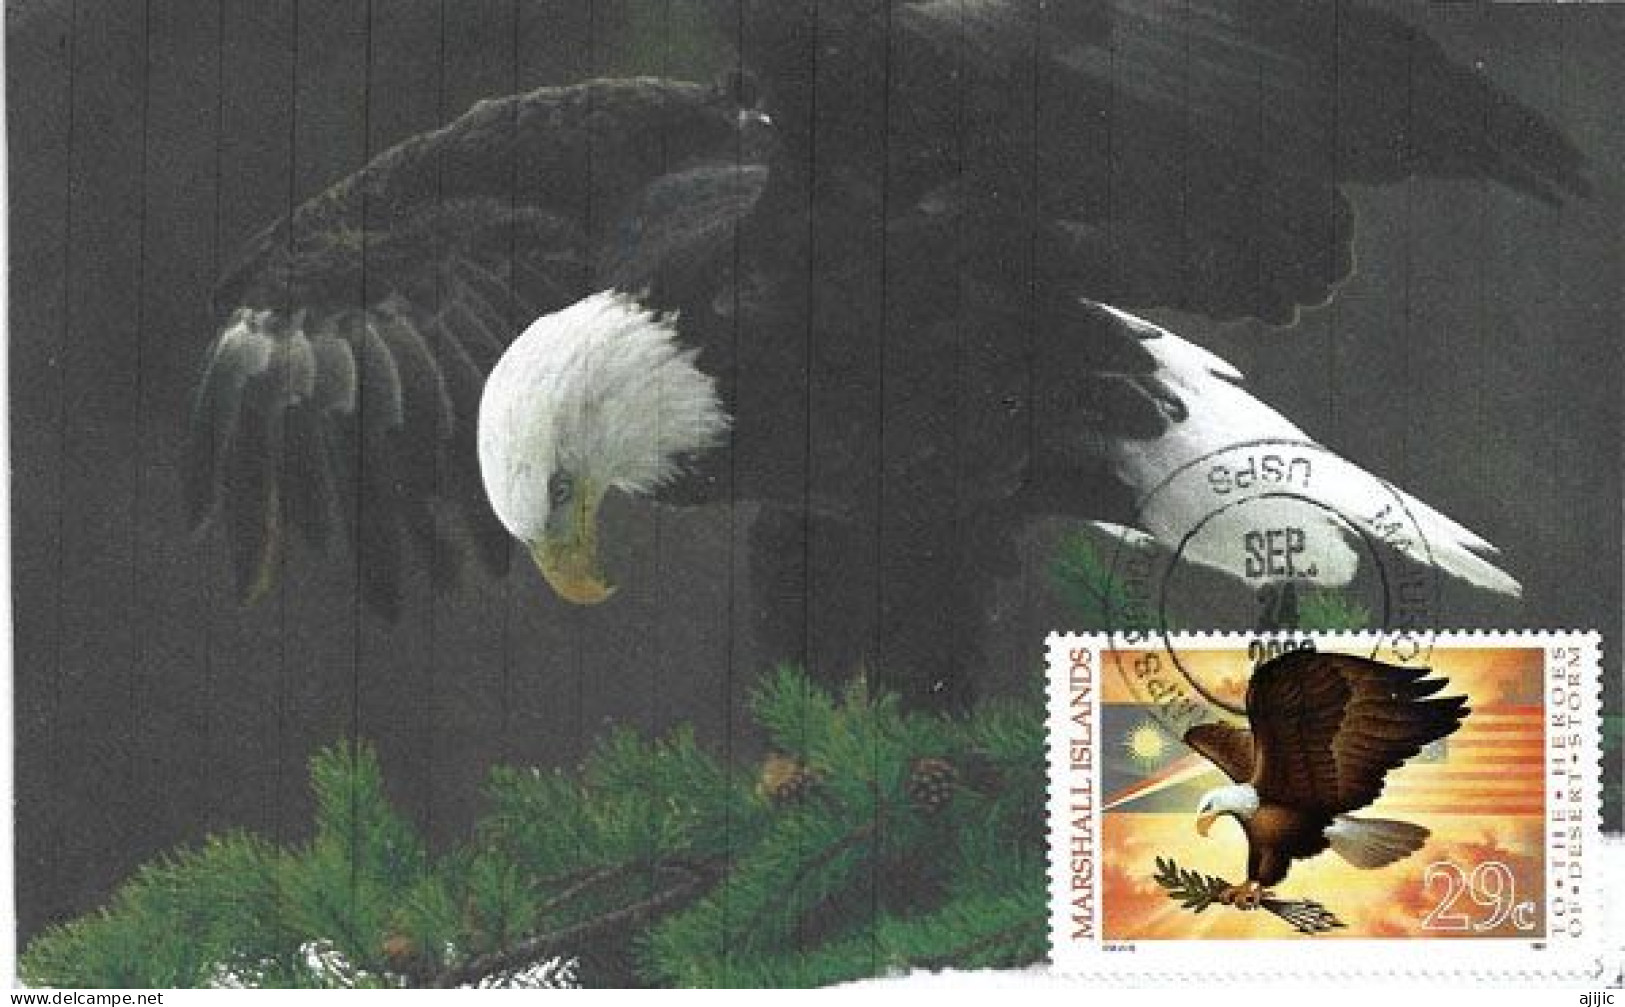 MARSHALL ISLAND: American Eagle (Bald Eagle)   MAXI-CARD From Majuro Marshall Islands - Aigles & Rapaces Diurnes